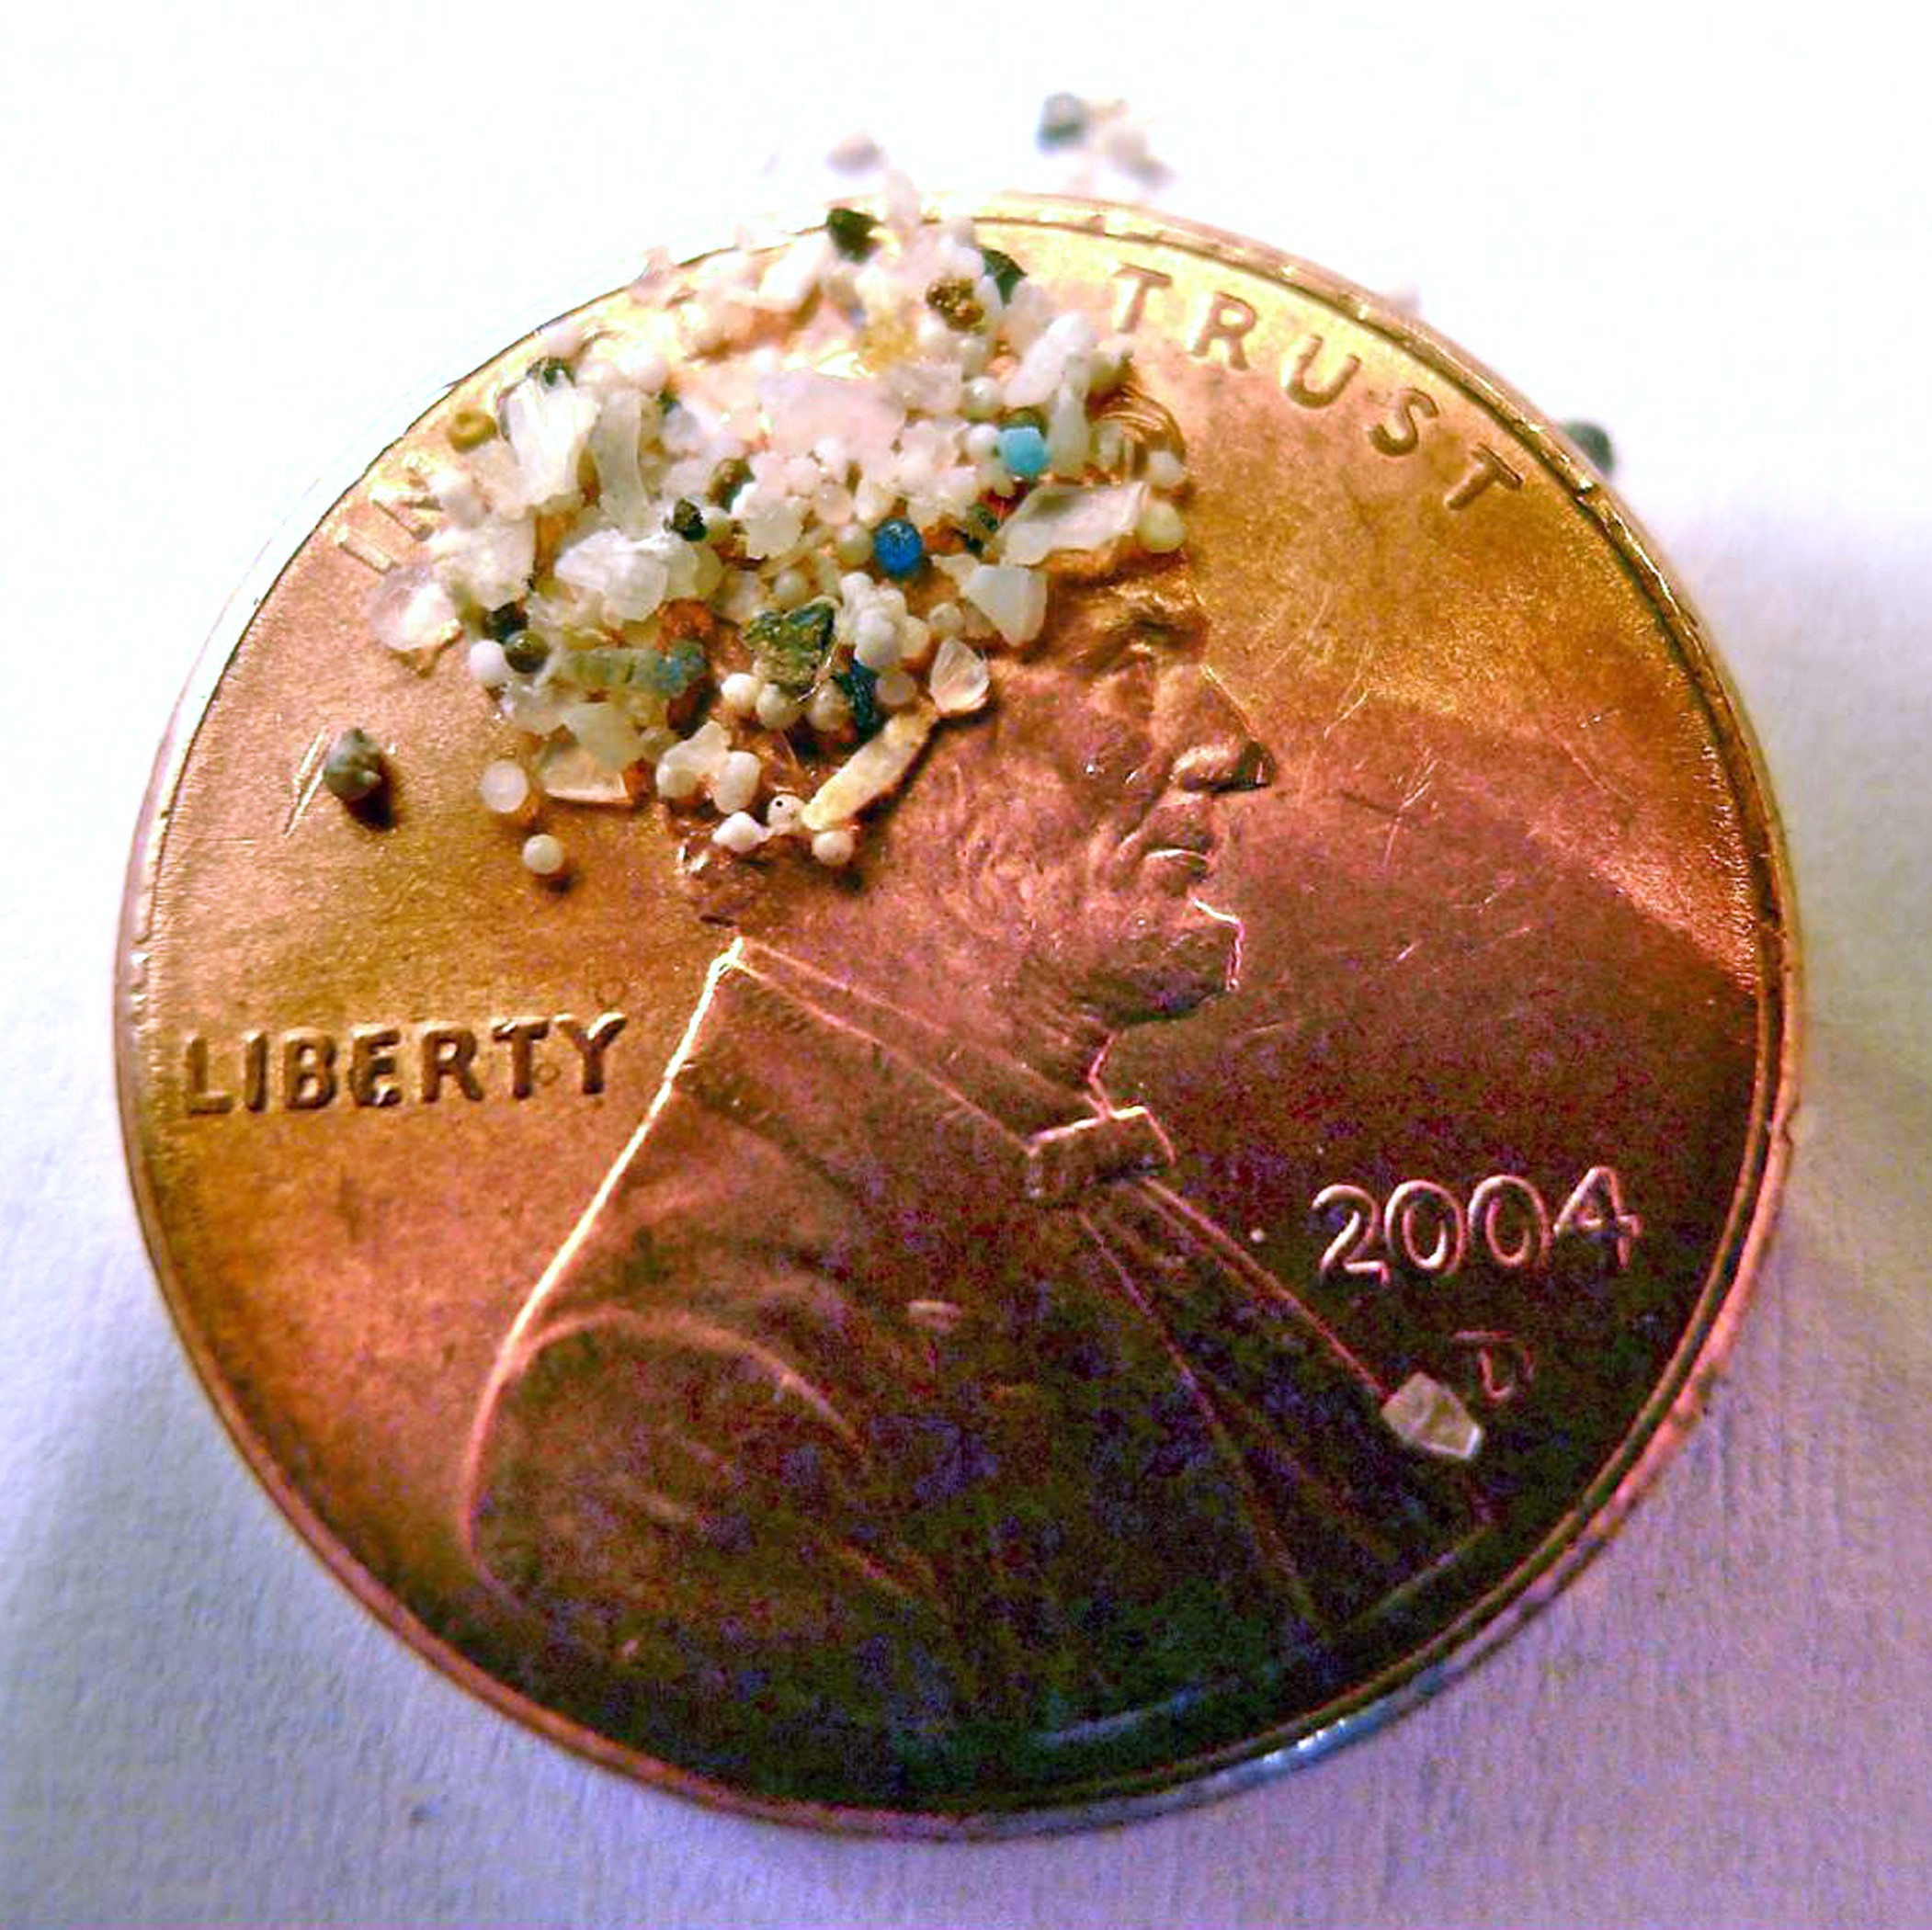 Uploaded Image: /vs-uploads/images/microbeads penny.jpg